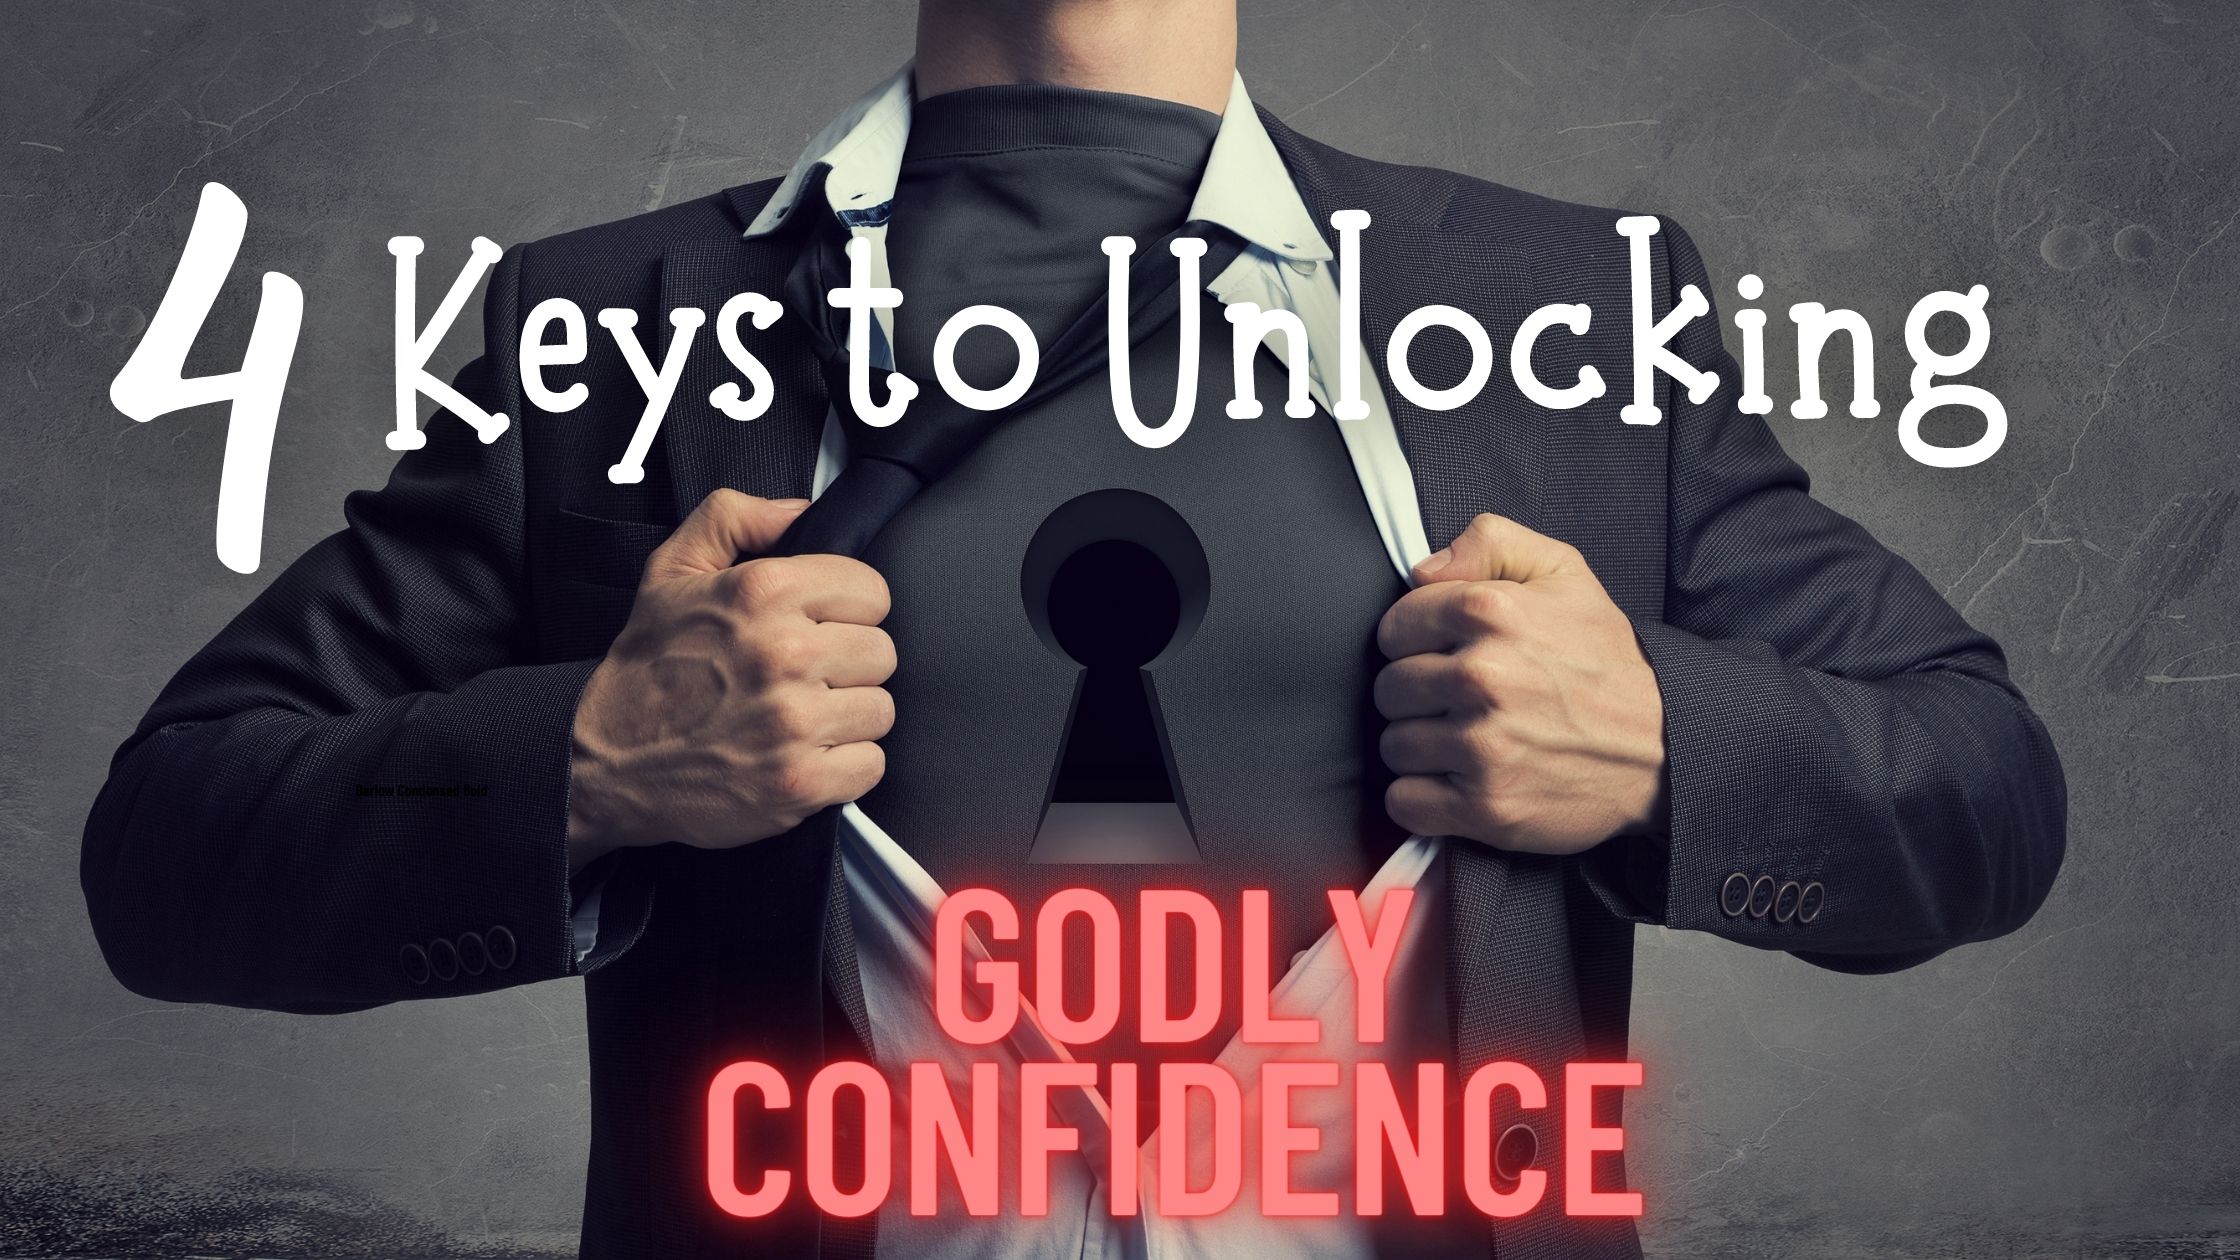 4 Keys to unlocking